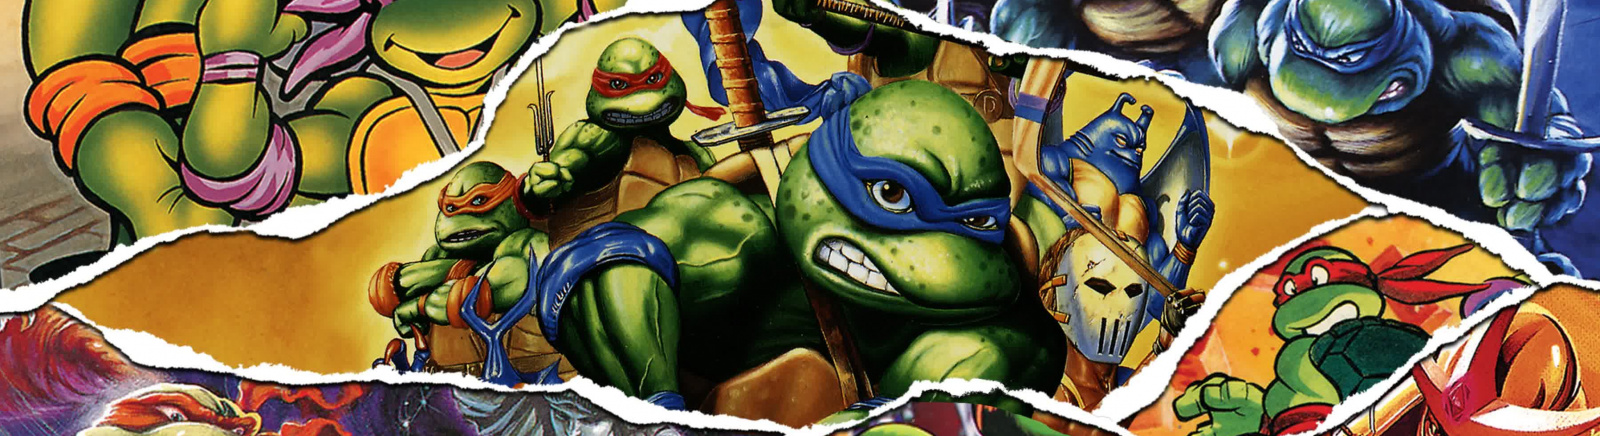 Дата выхода Teenage Mutant Ninja Turtles: The Cowabunga Collection (TMNT: The Cowabunga Collection)  на PC, PS5 и Xbox Series X/S в России и во всем мире